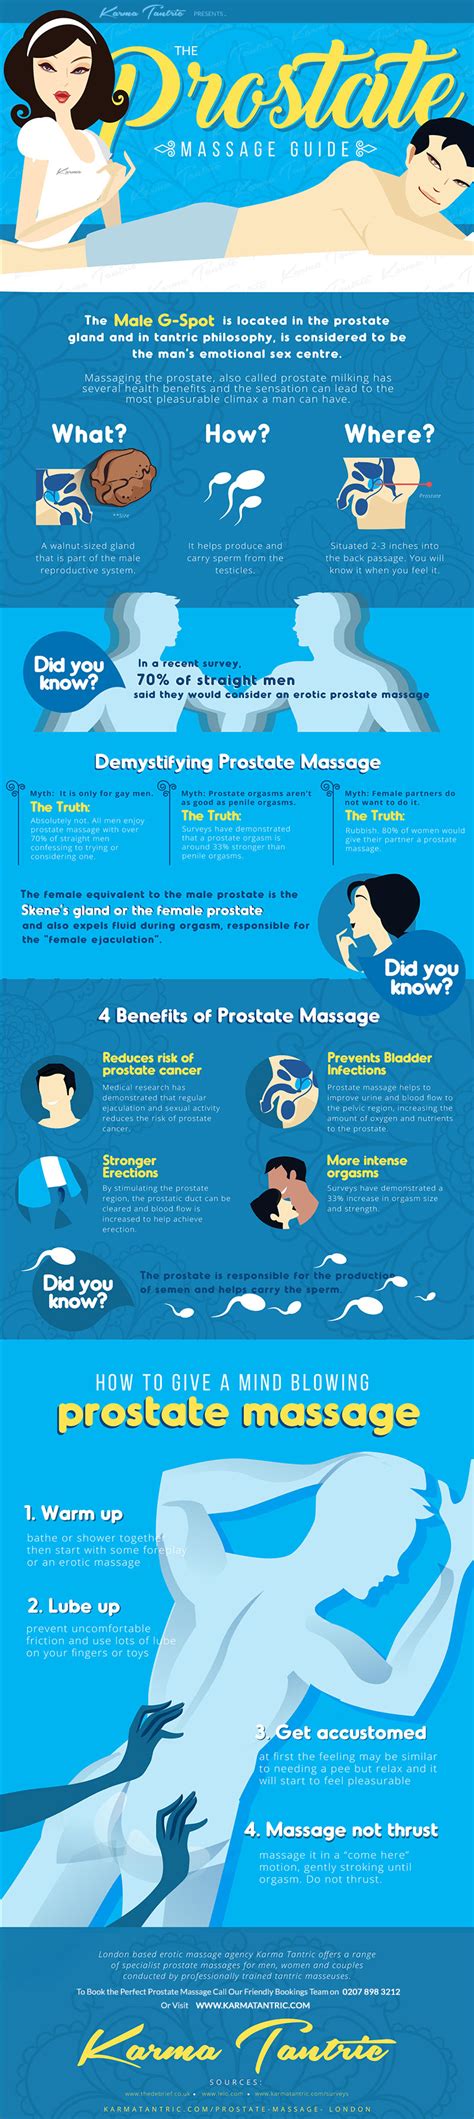 Prostate Massage Health Benefits And How It Works Kienitvcacke